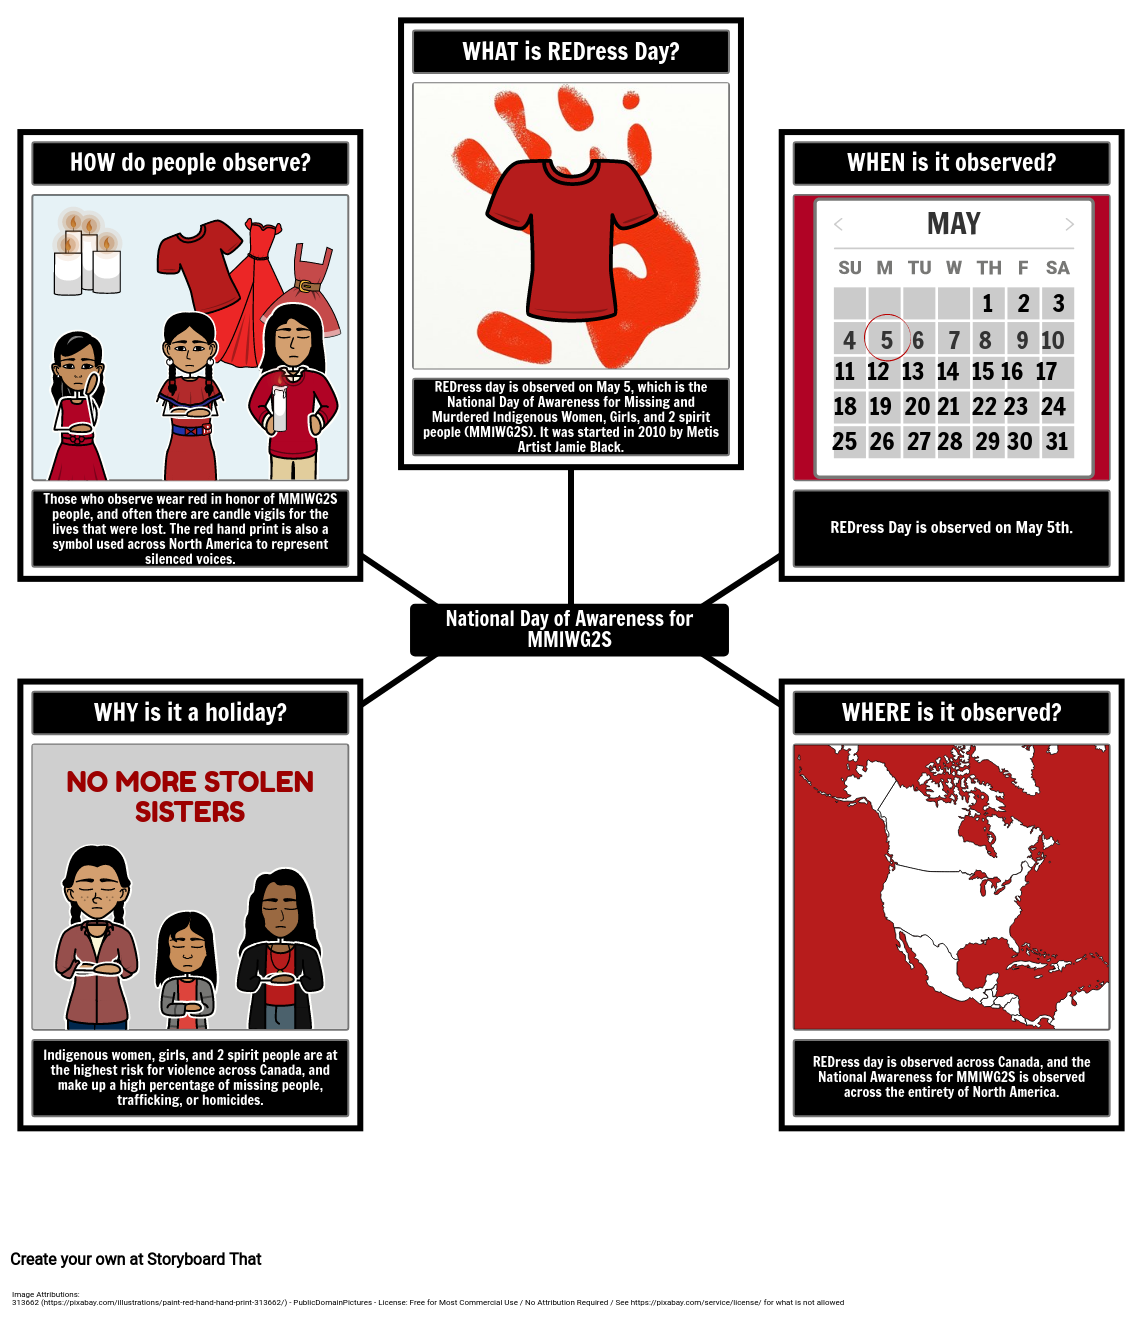 REDress Day Canada